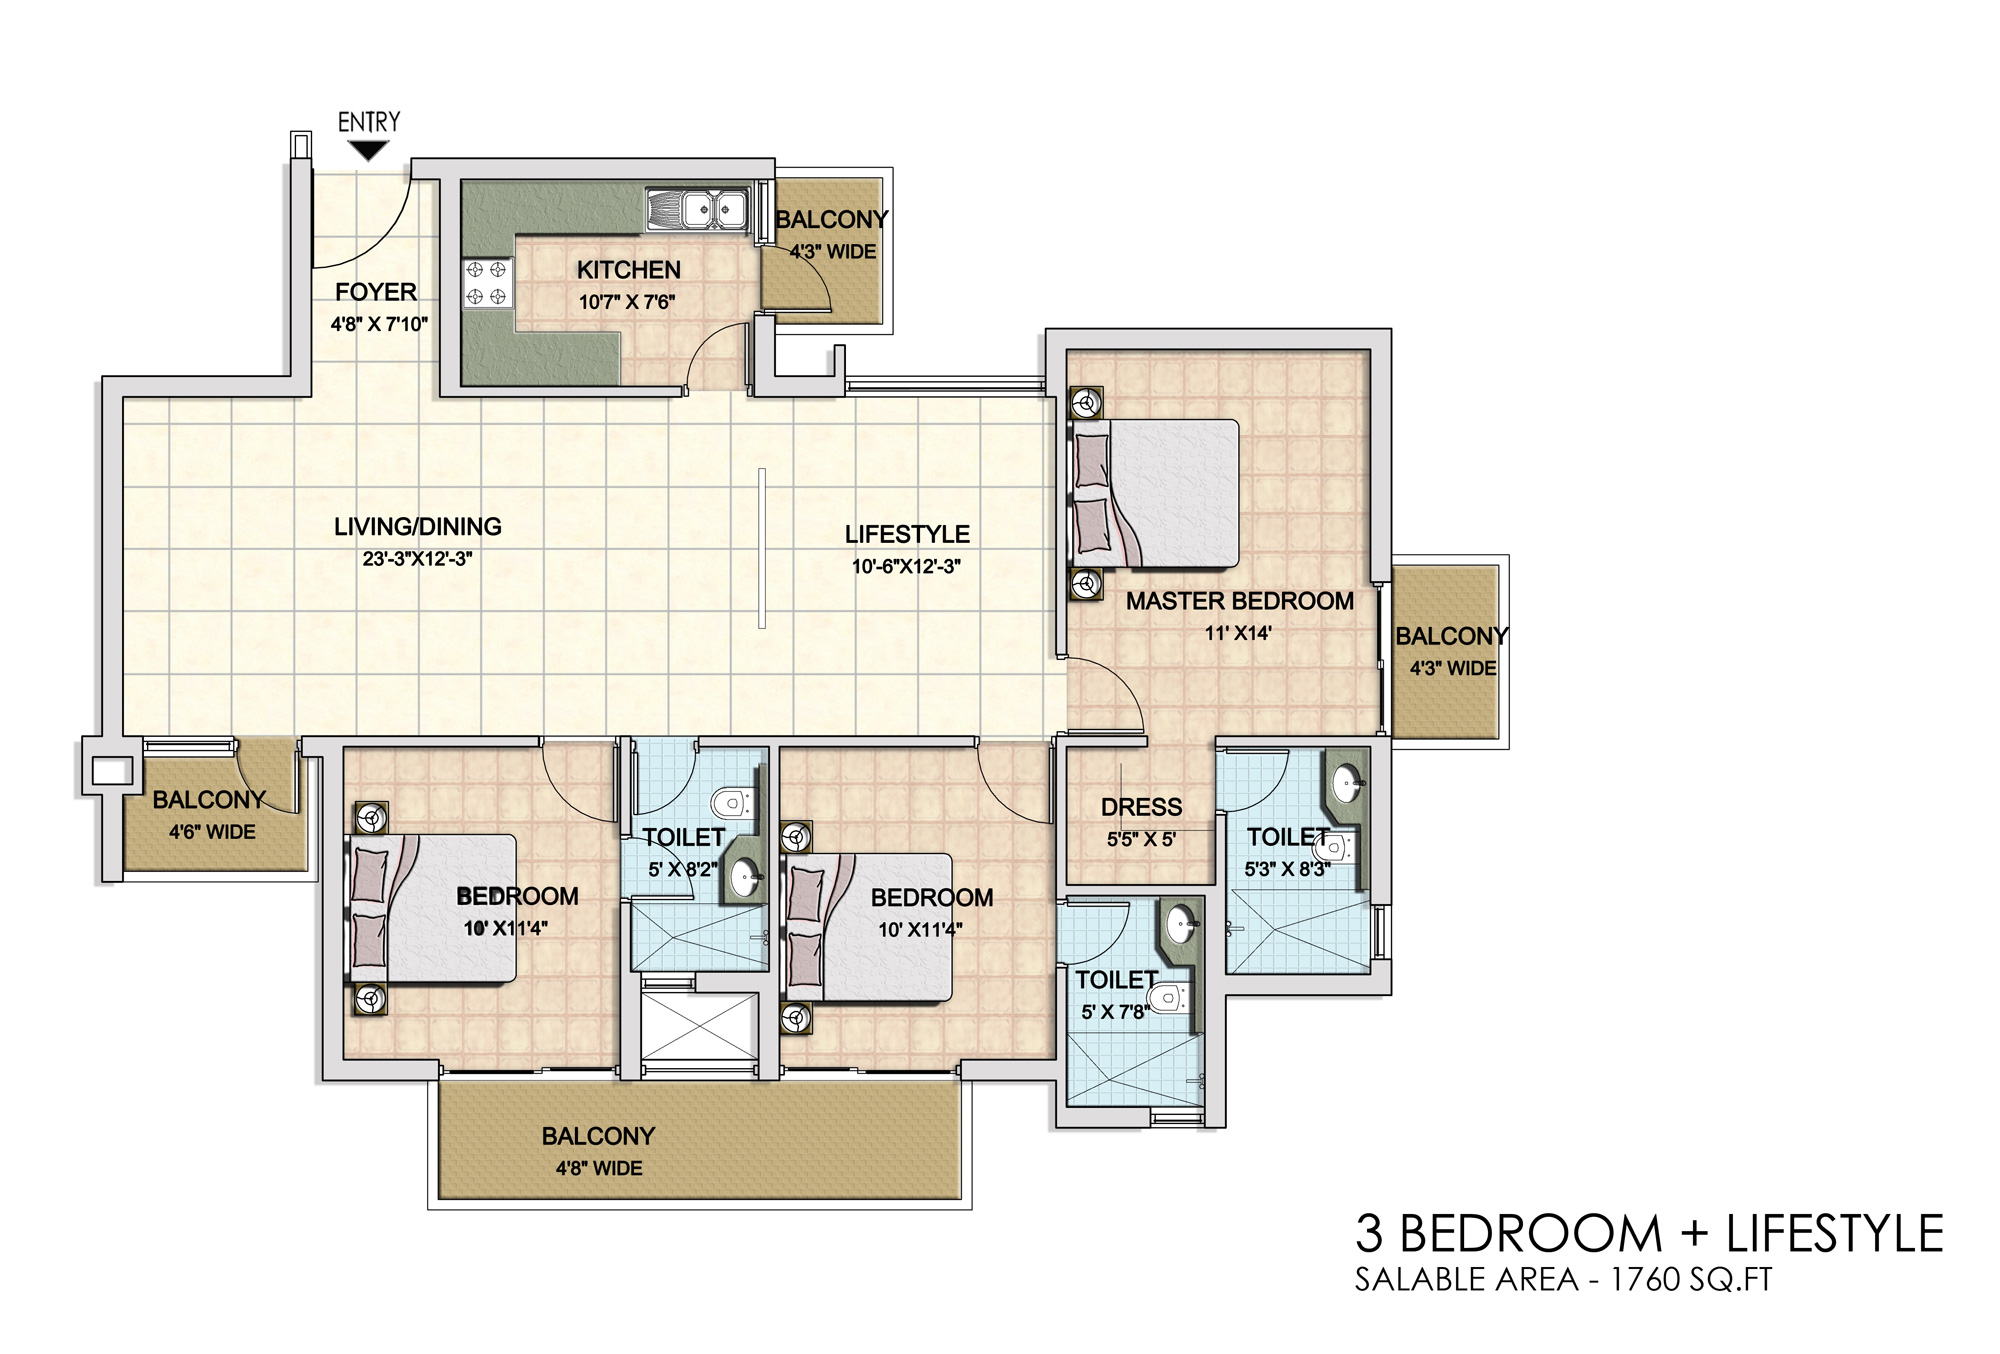 3 Bedroom + Lifestyle (1760 sq.ft.) 